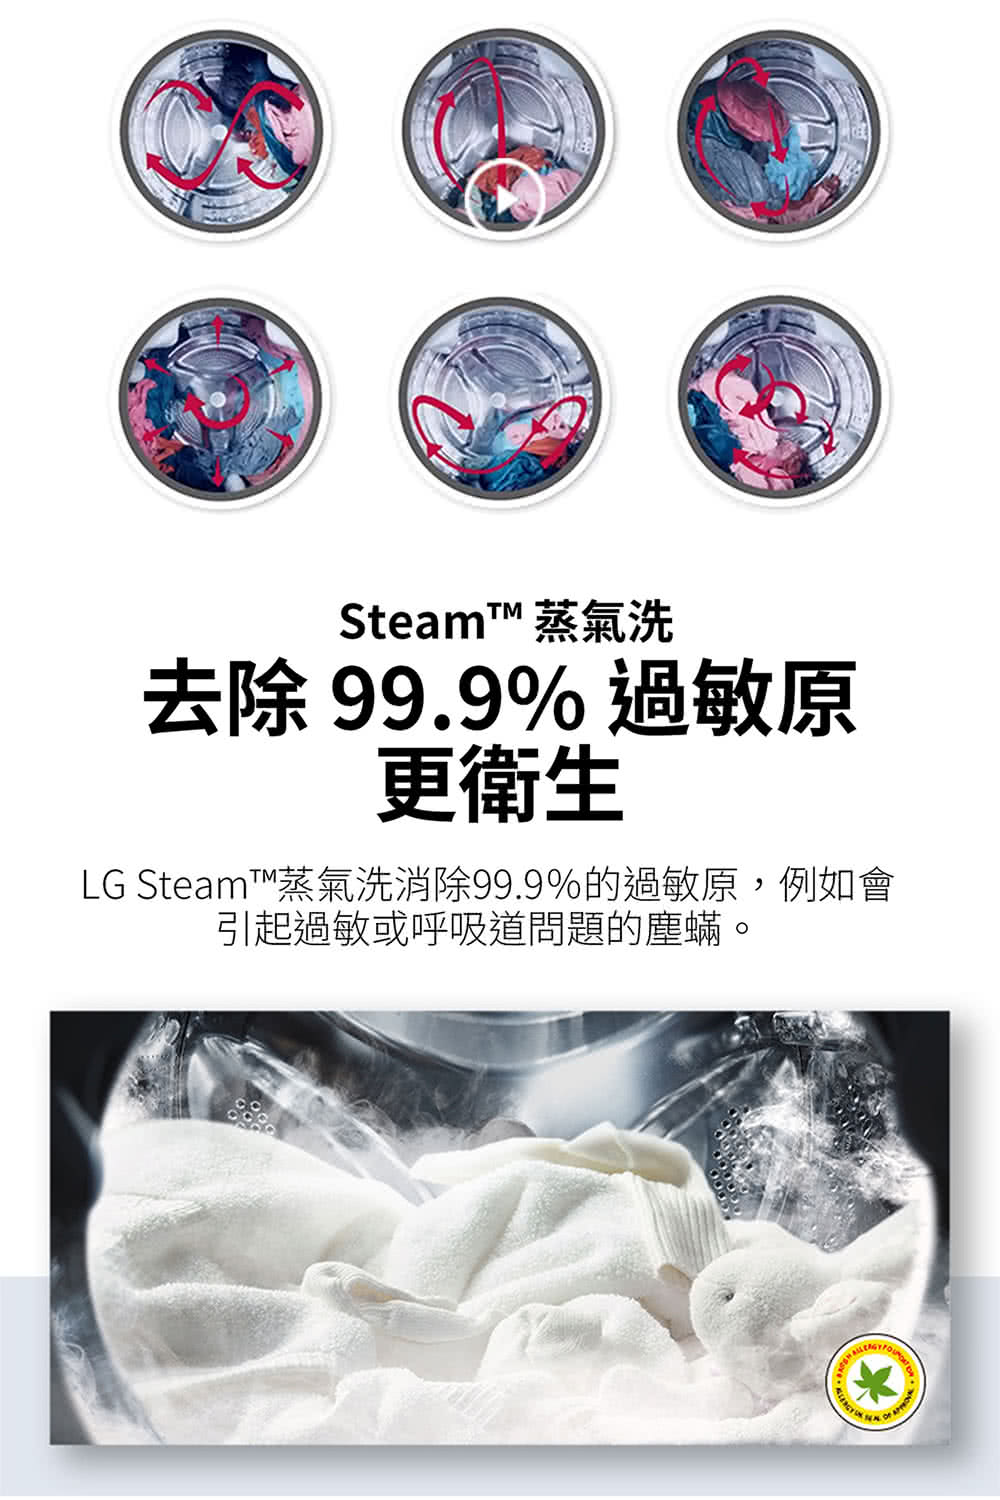 Steam ]~ h99.9% Lӭ å LG Steam]~99.9%Lӭ,Ҧp| ް_LөΩIlDD蟎C 